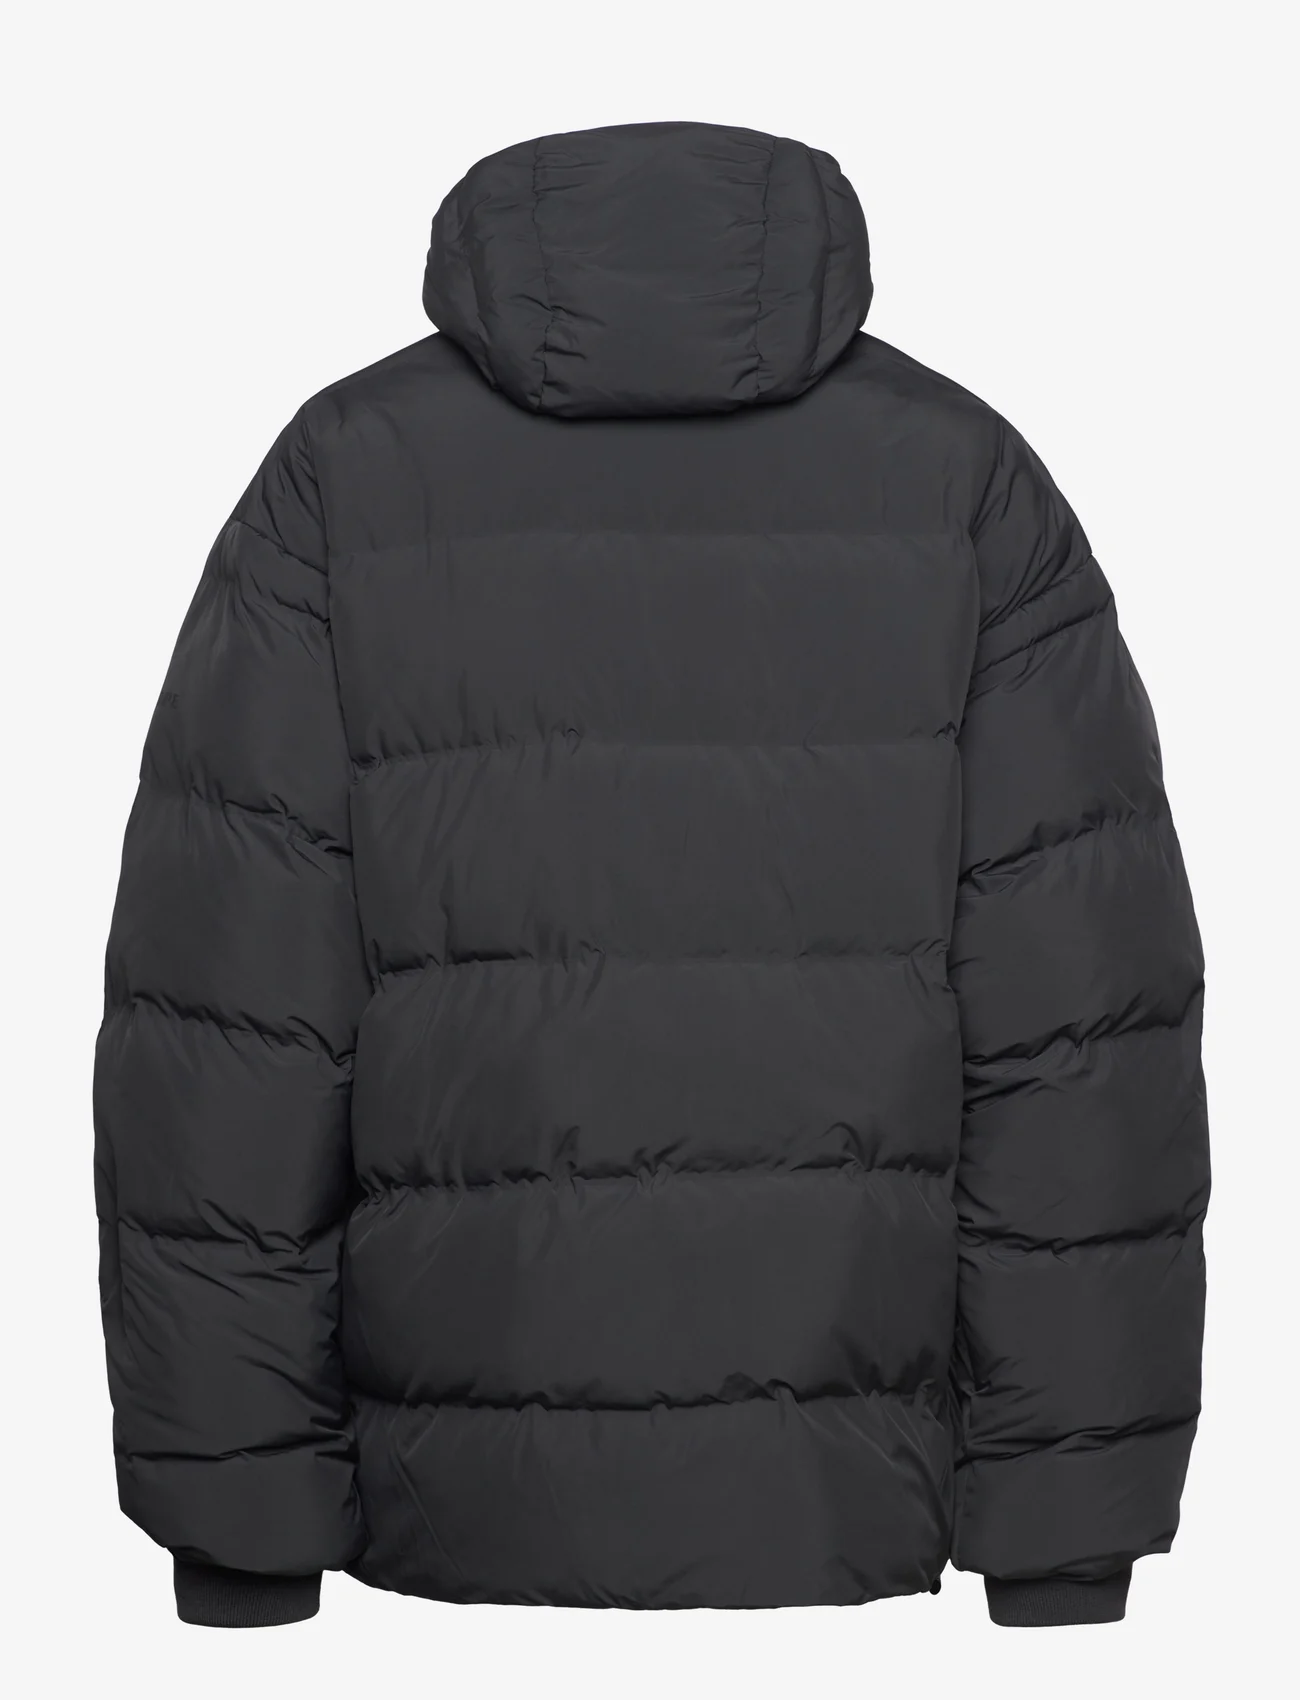 Hope - Boxy Puffer Jacket - winter jackets - magnet grey - 1